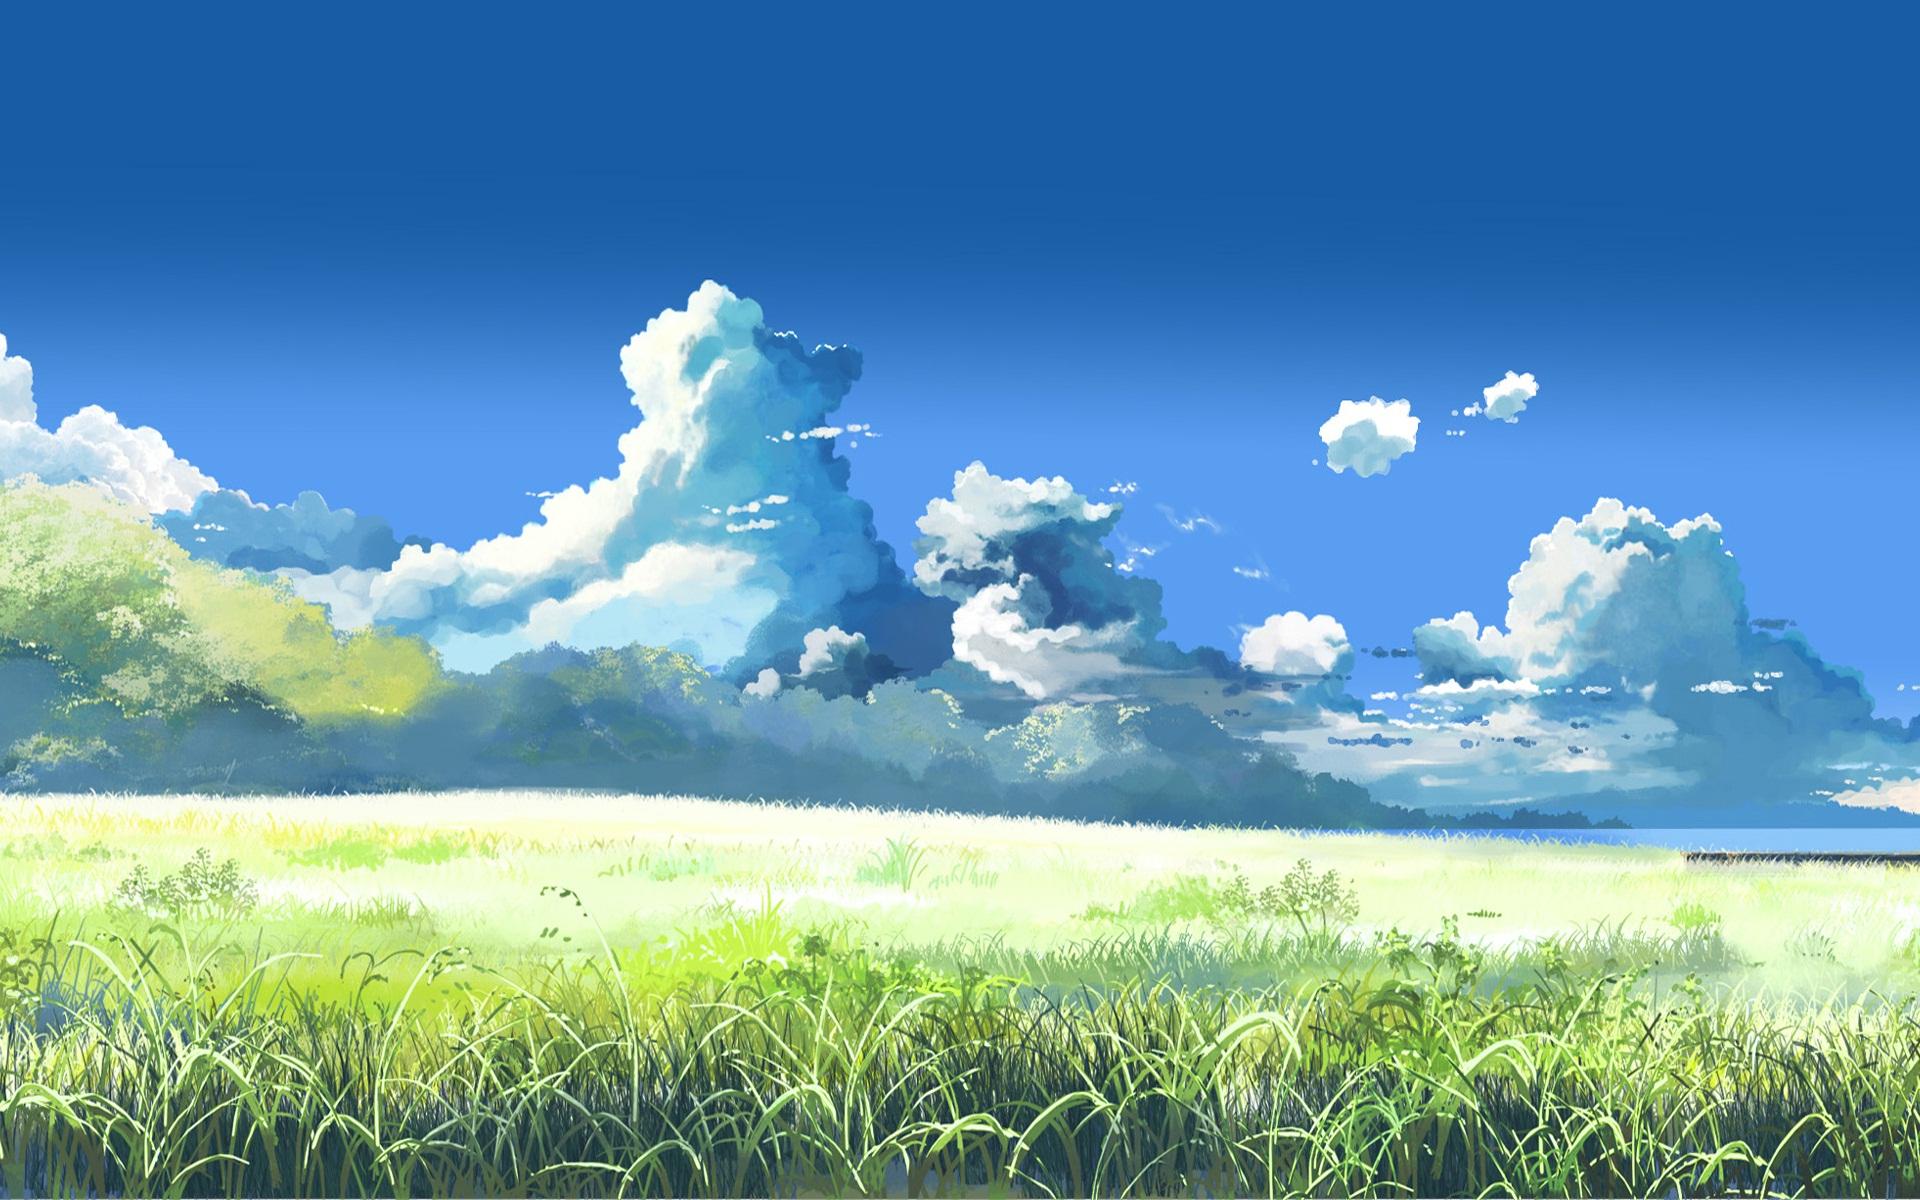 epic anime landscape